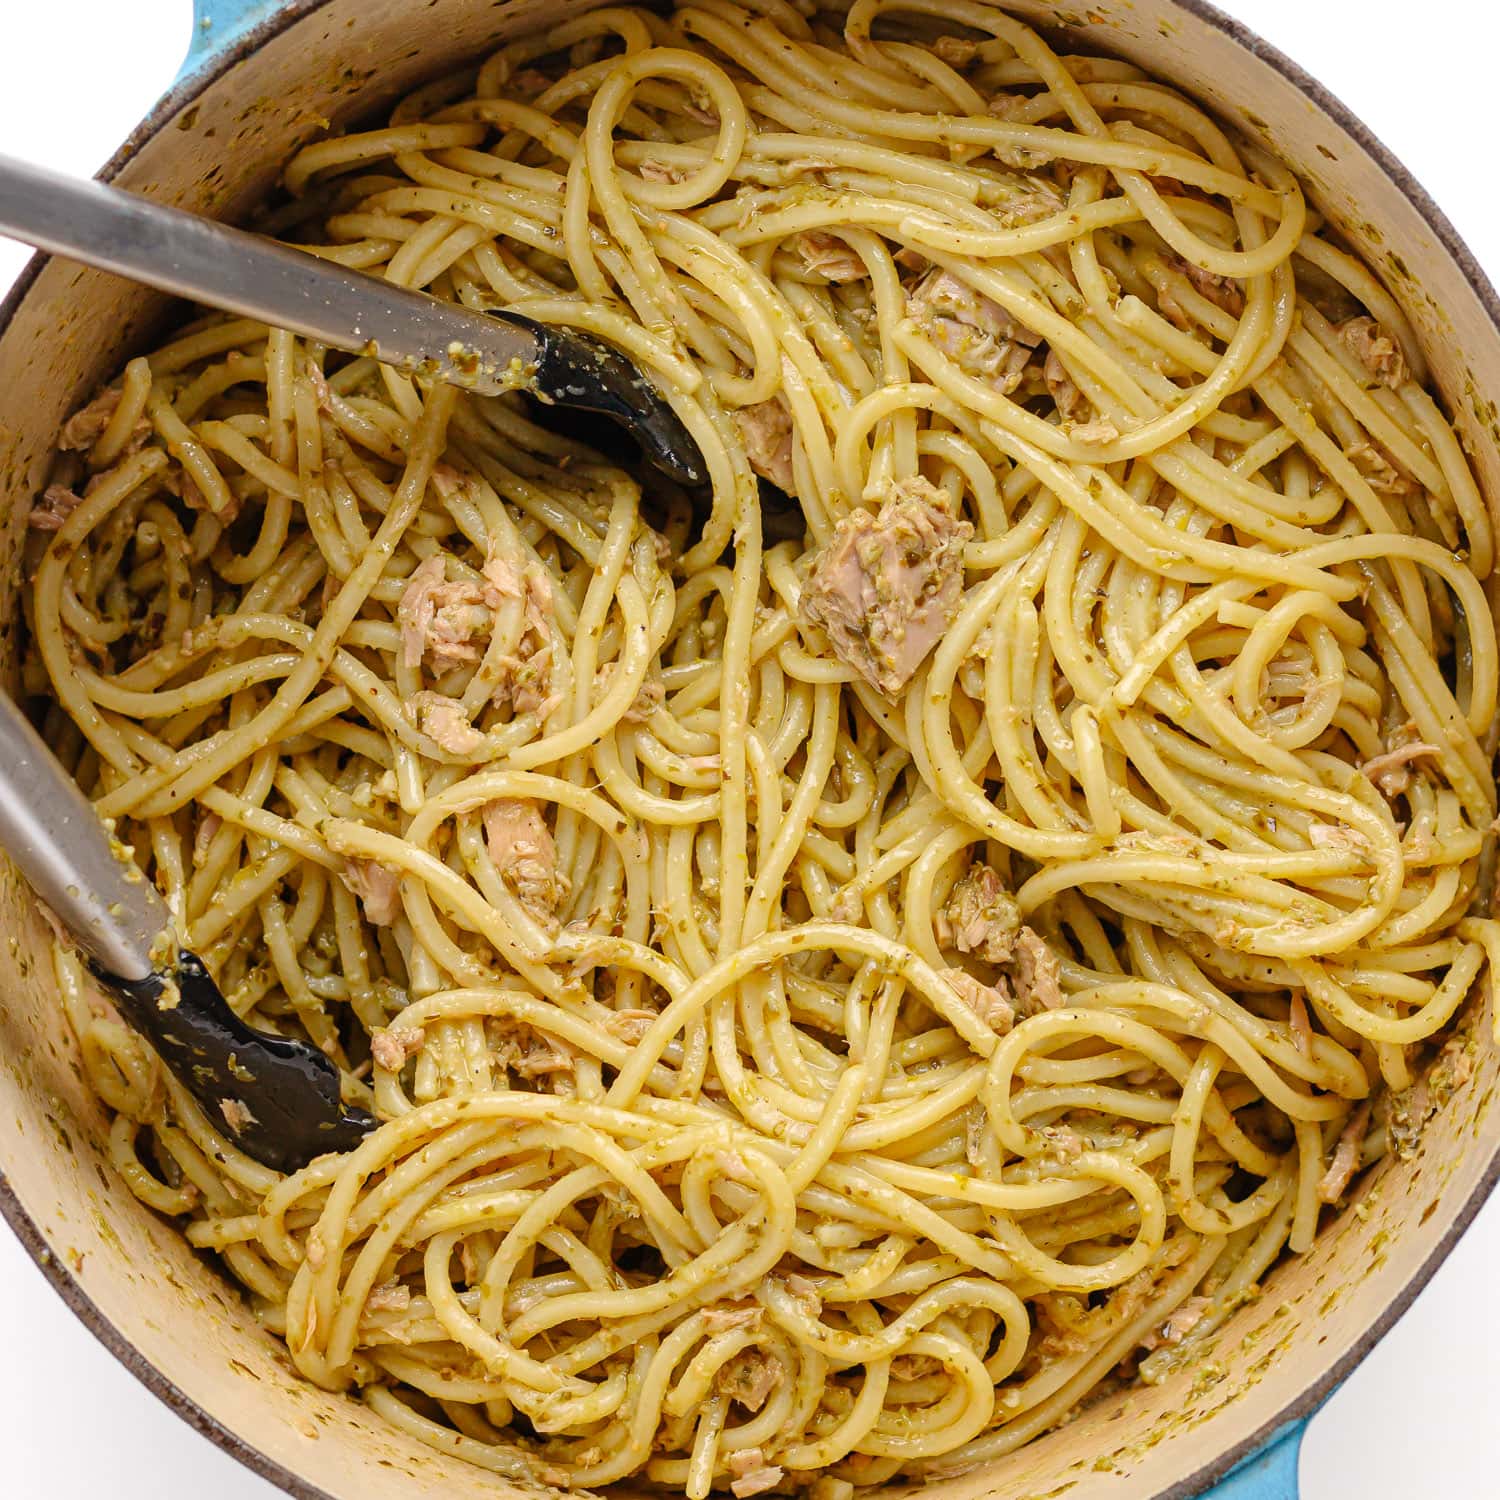 Tongs tossing tuna pesto spaghetti in a dutch oven.